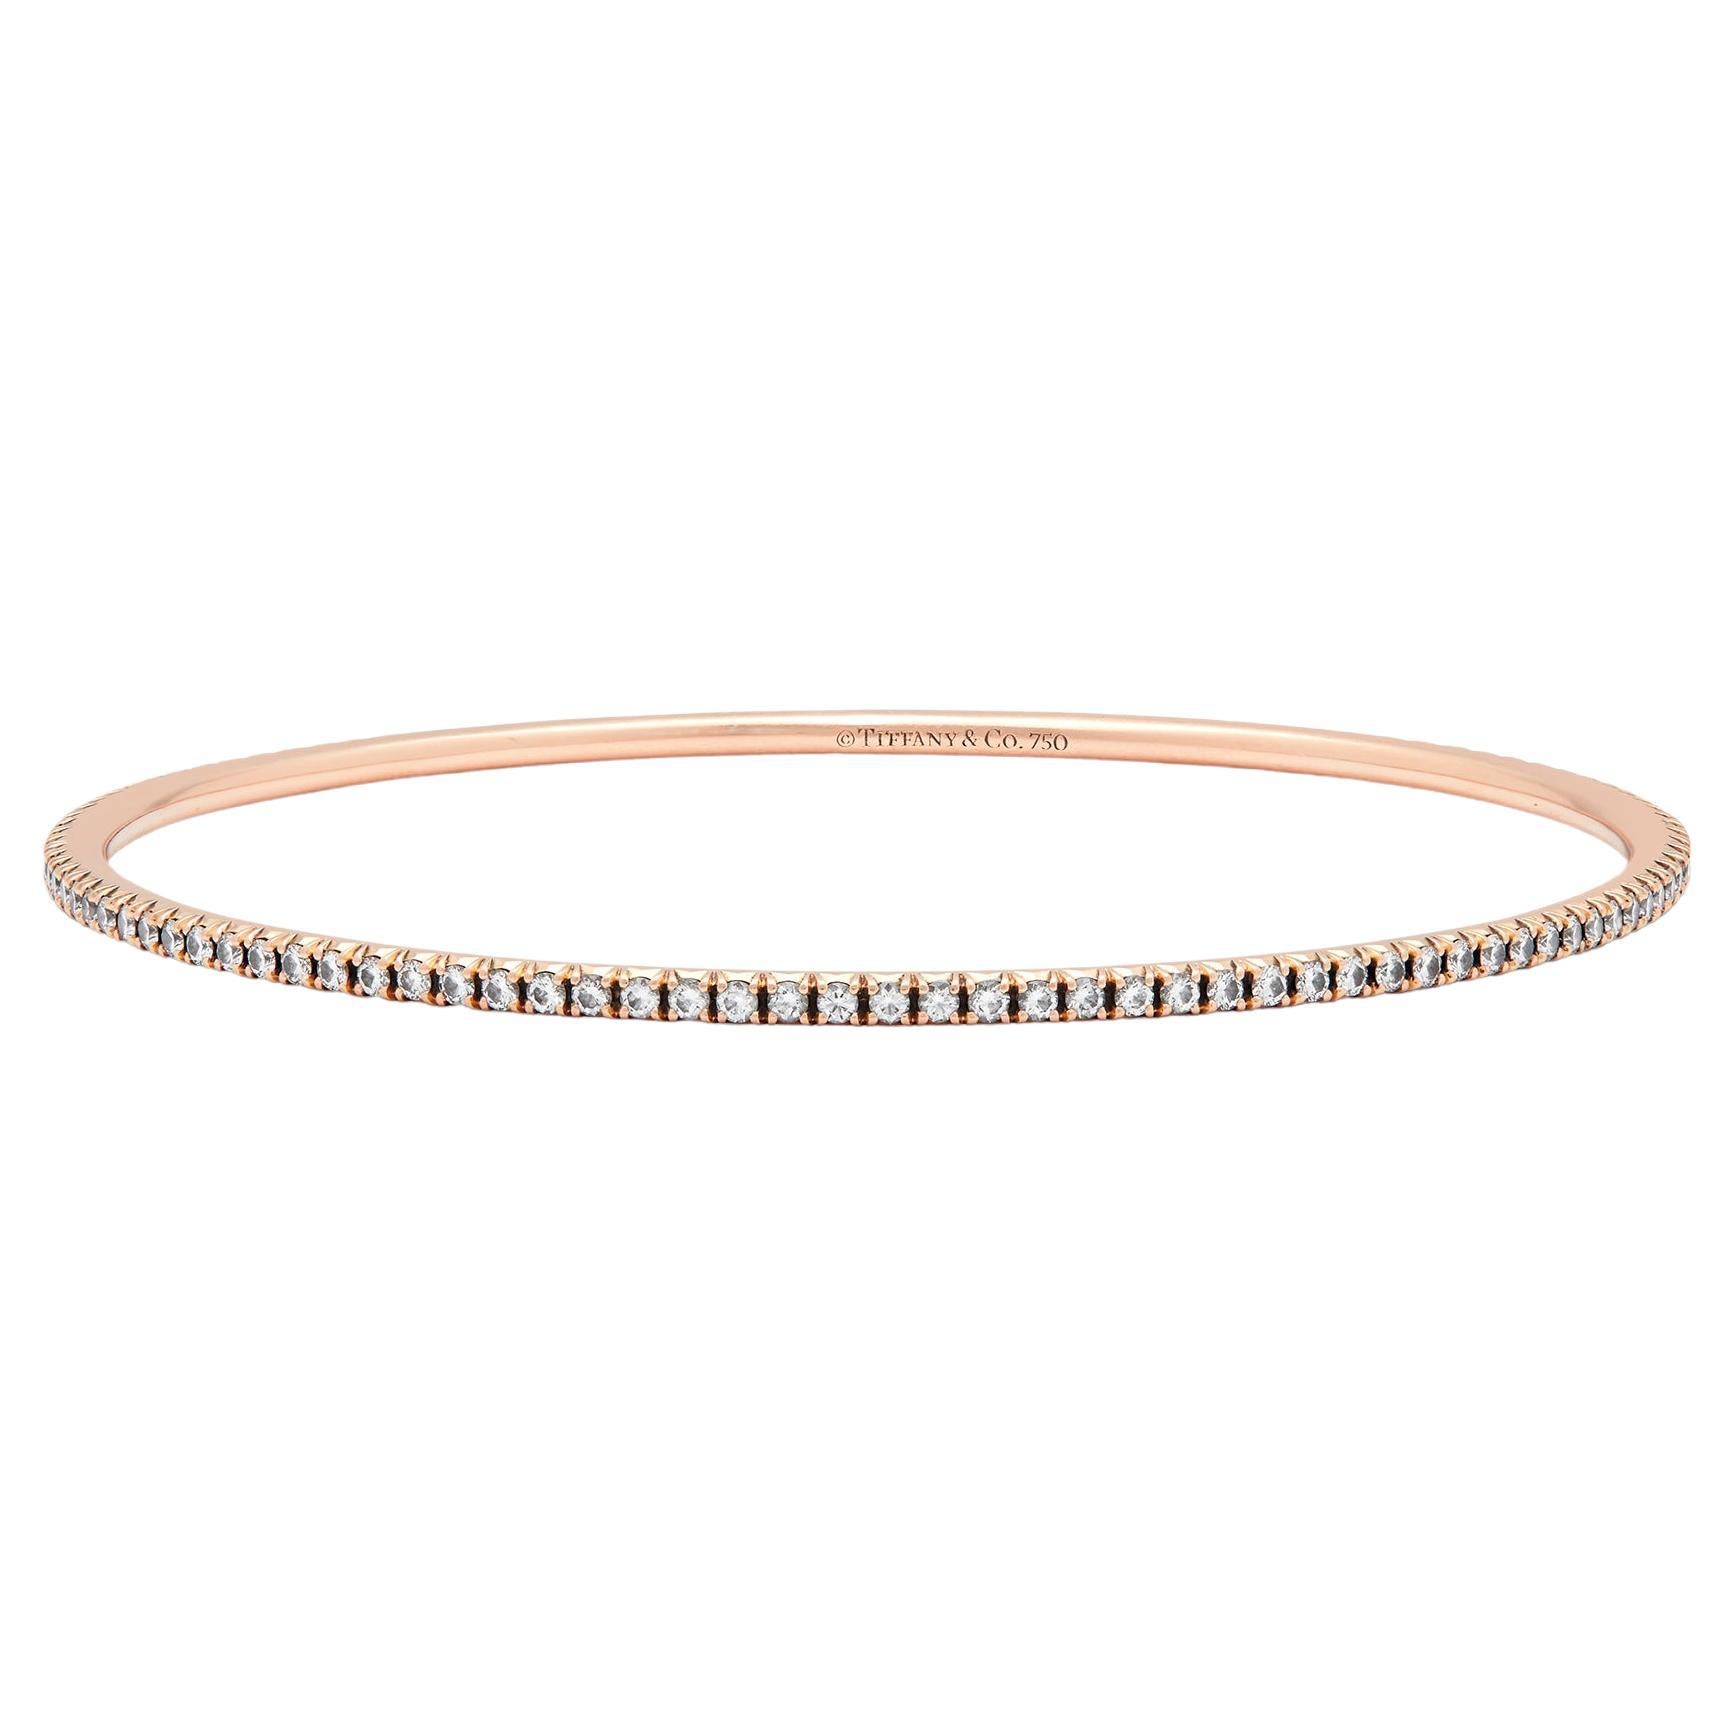 Tiffany & Co Bracelet de fermeture en or rose "Metro" serti de diamants.